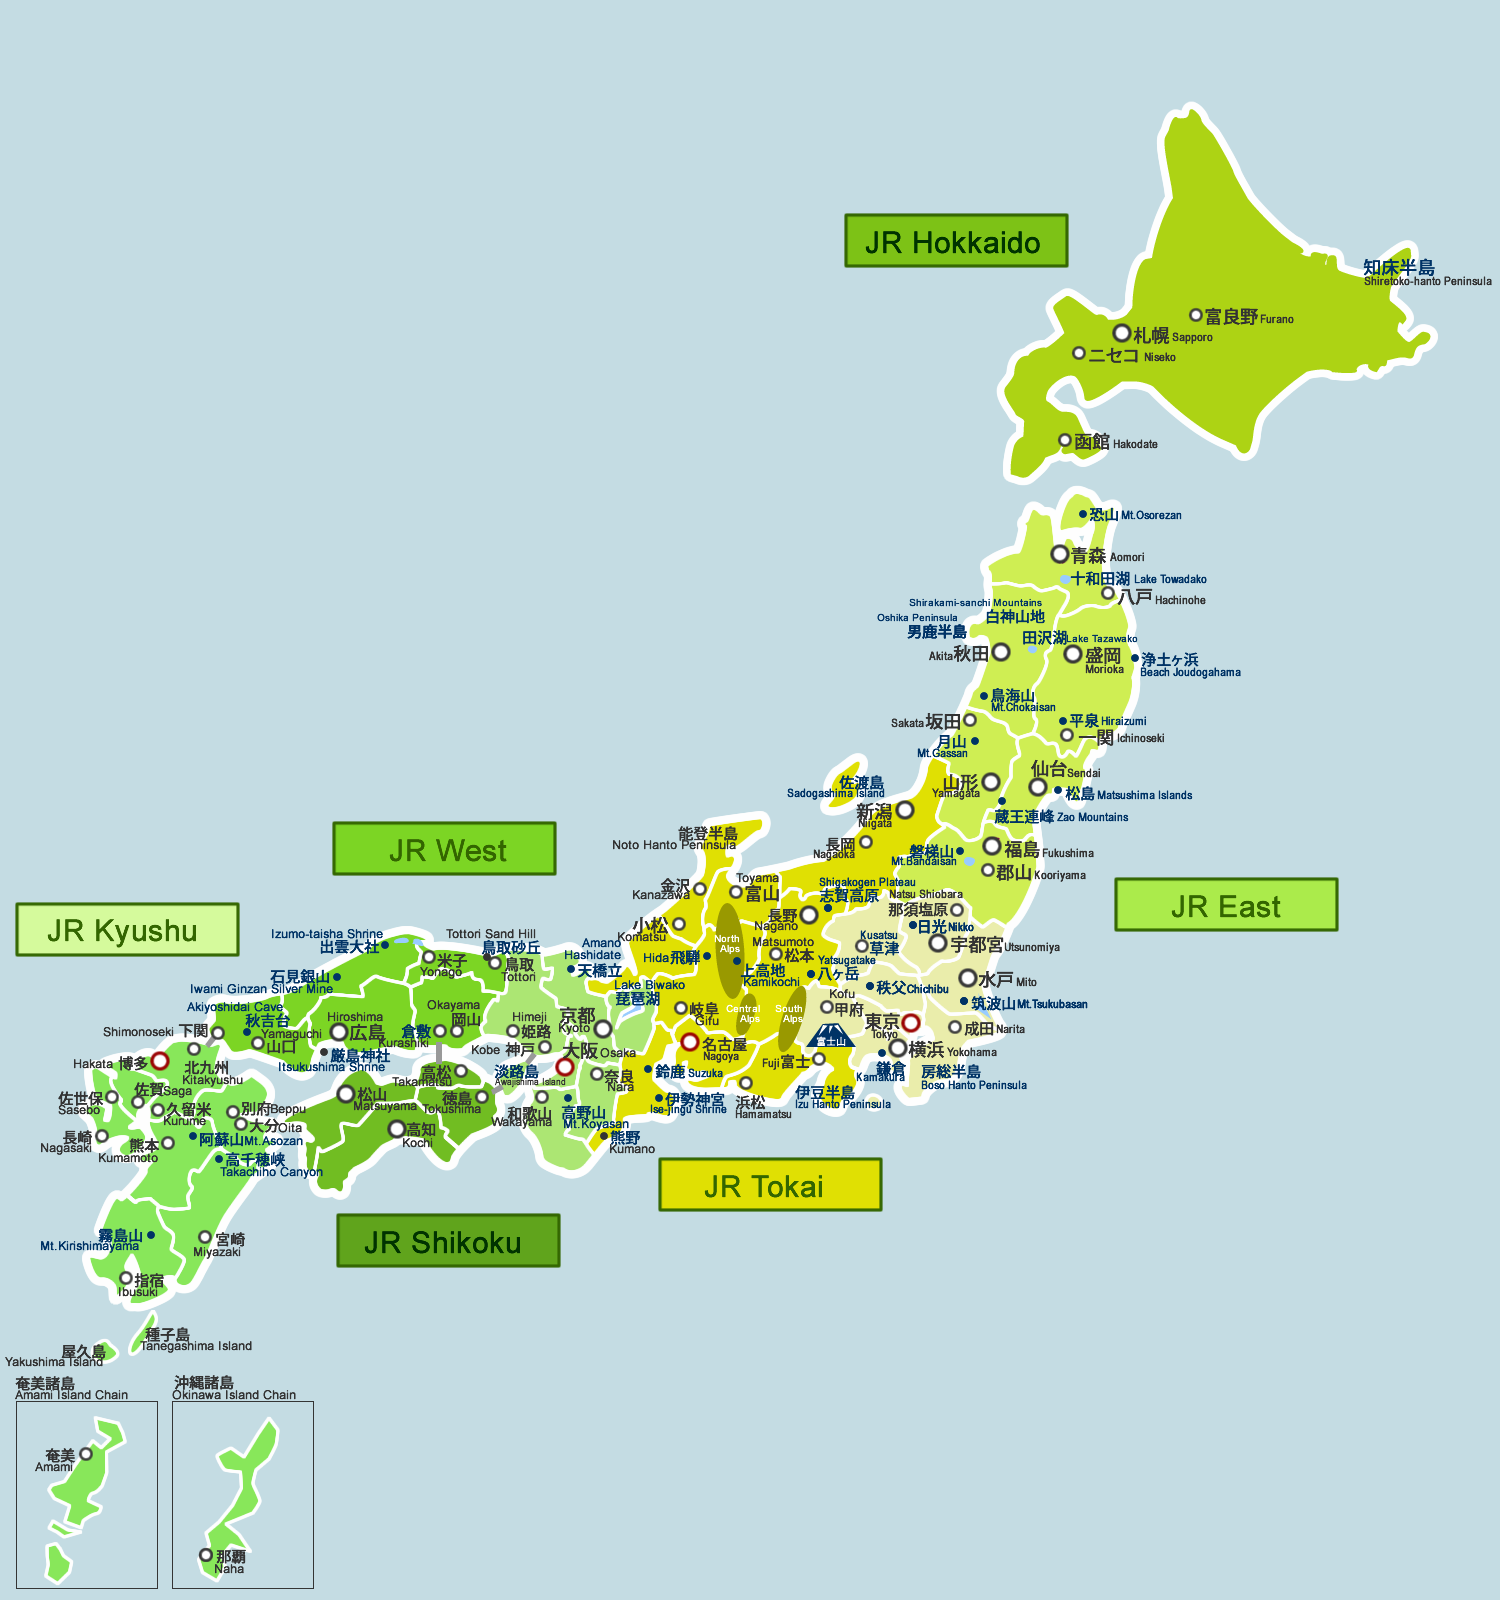 Map Of Japan Cities Maps of Japan : Cities, Prefectures | digi joho Japan TOKYO BUSINESS